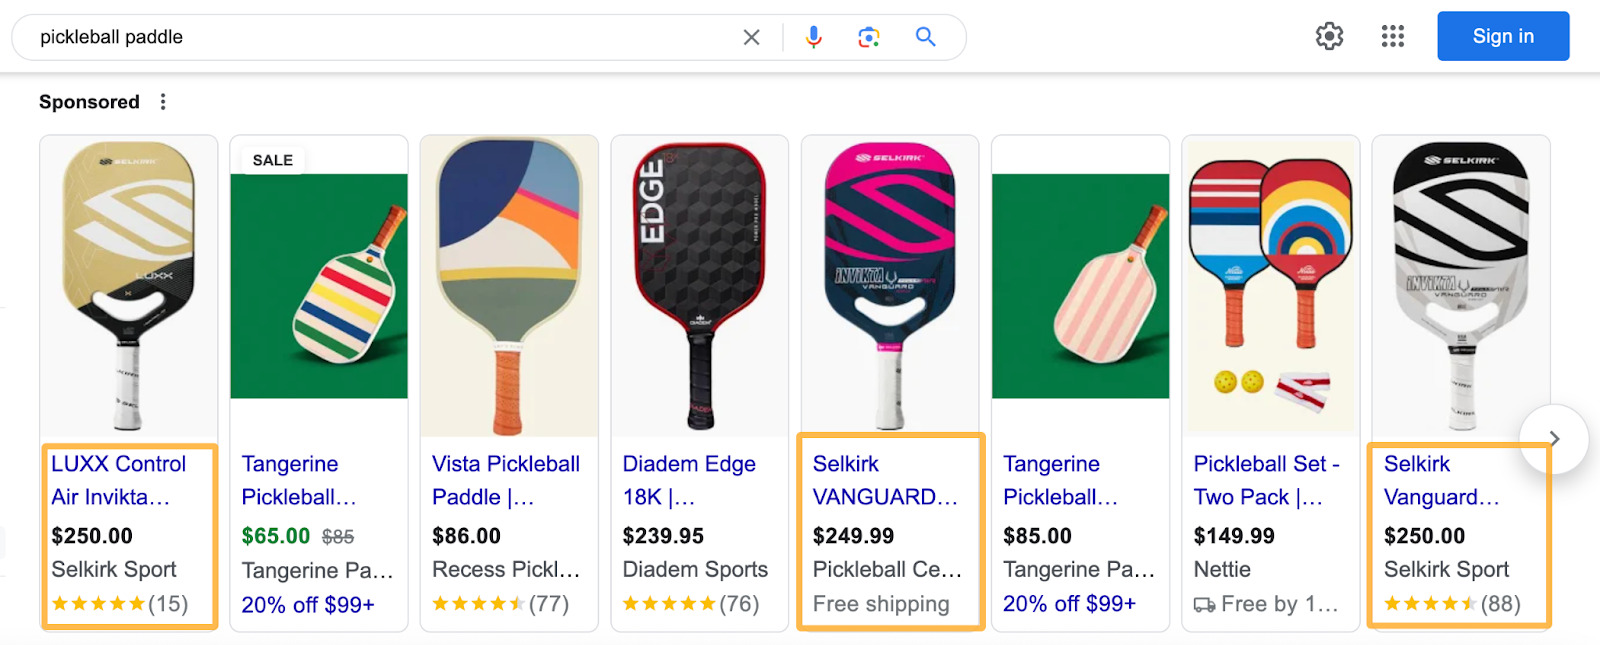 Pickleball paddle sponsored ads check, via Google.com